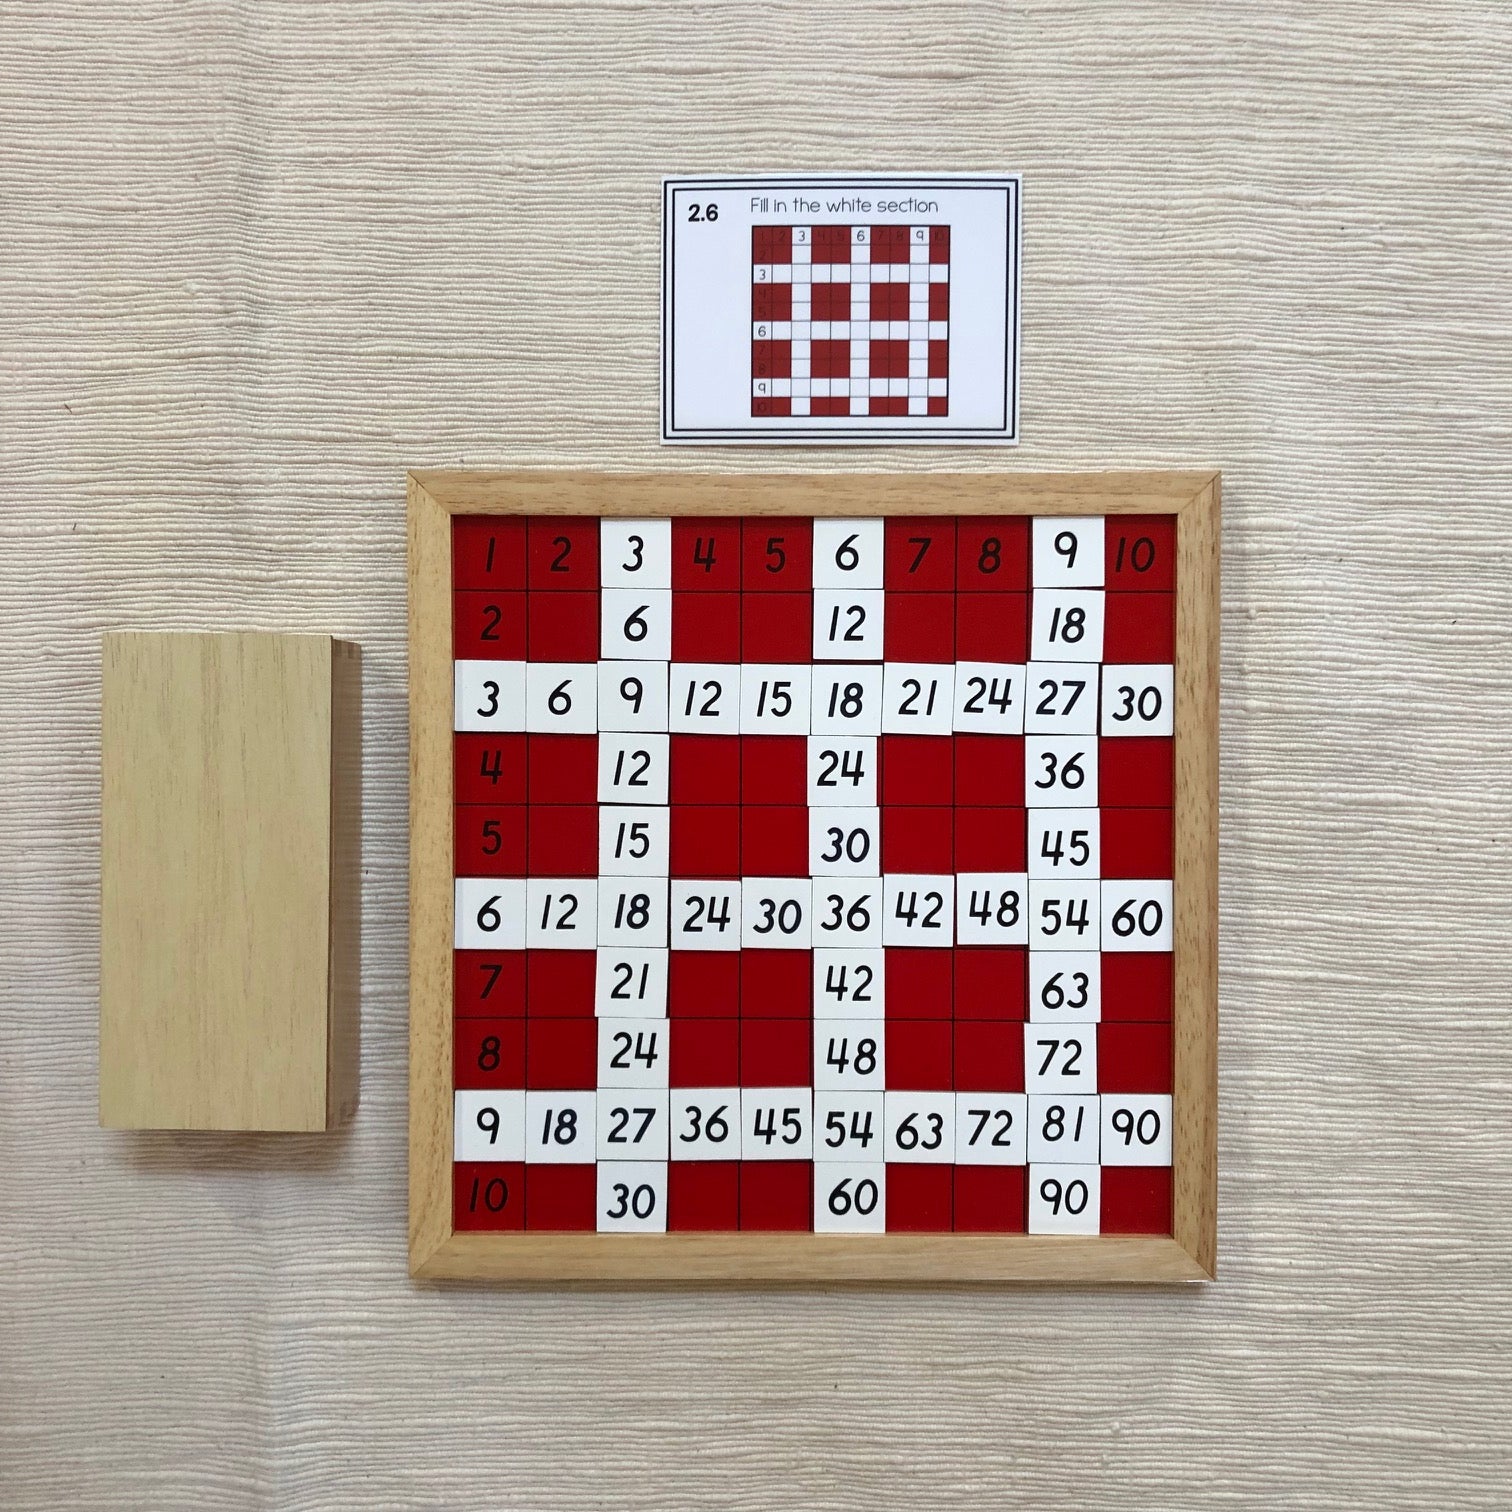 Montessori math: Pythagoras board task cards - montessorikiwi